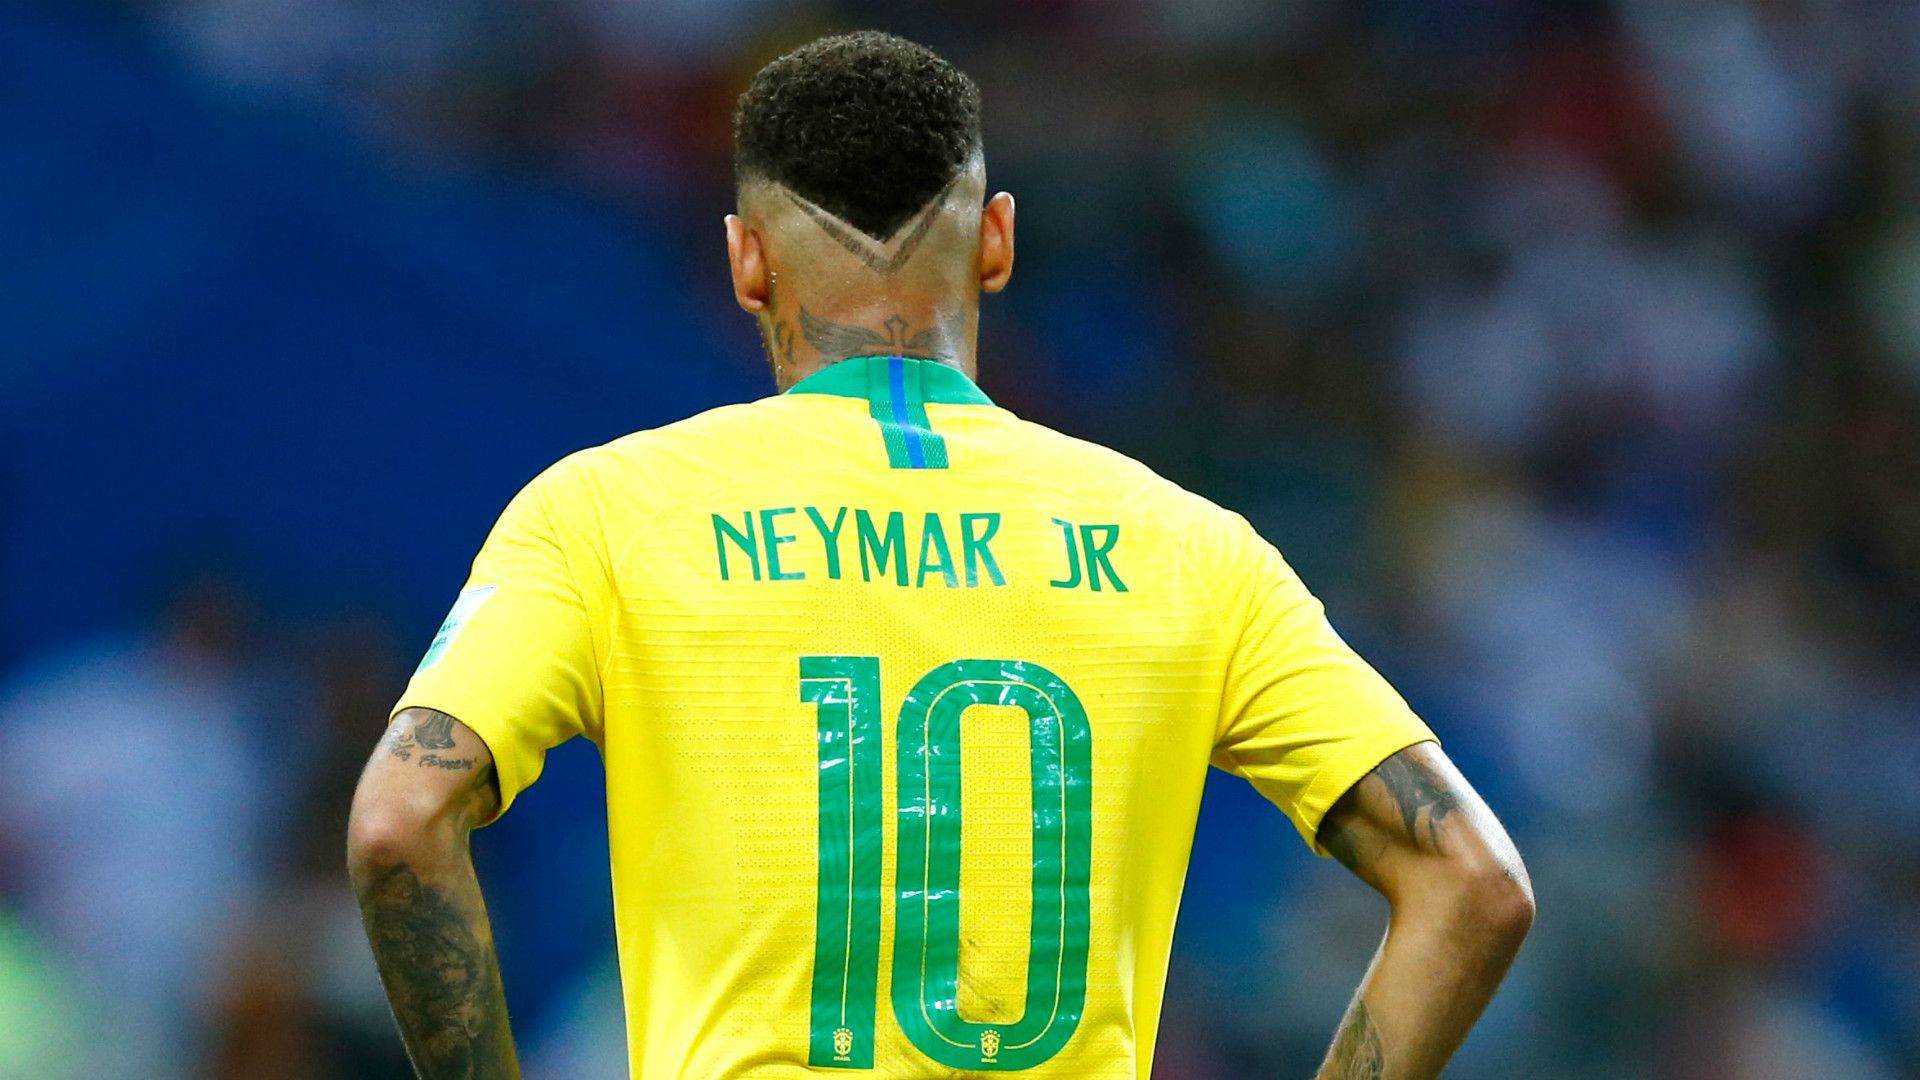 Jesus Neymar 10 squad numbers this month